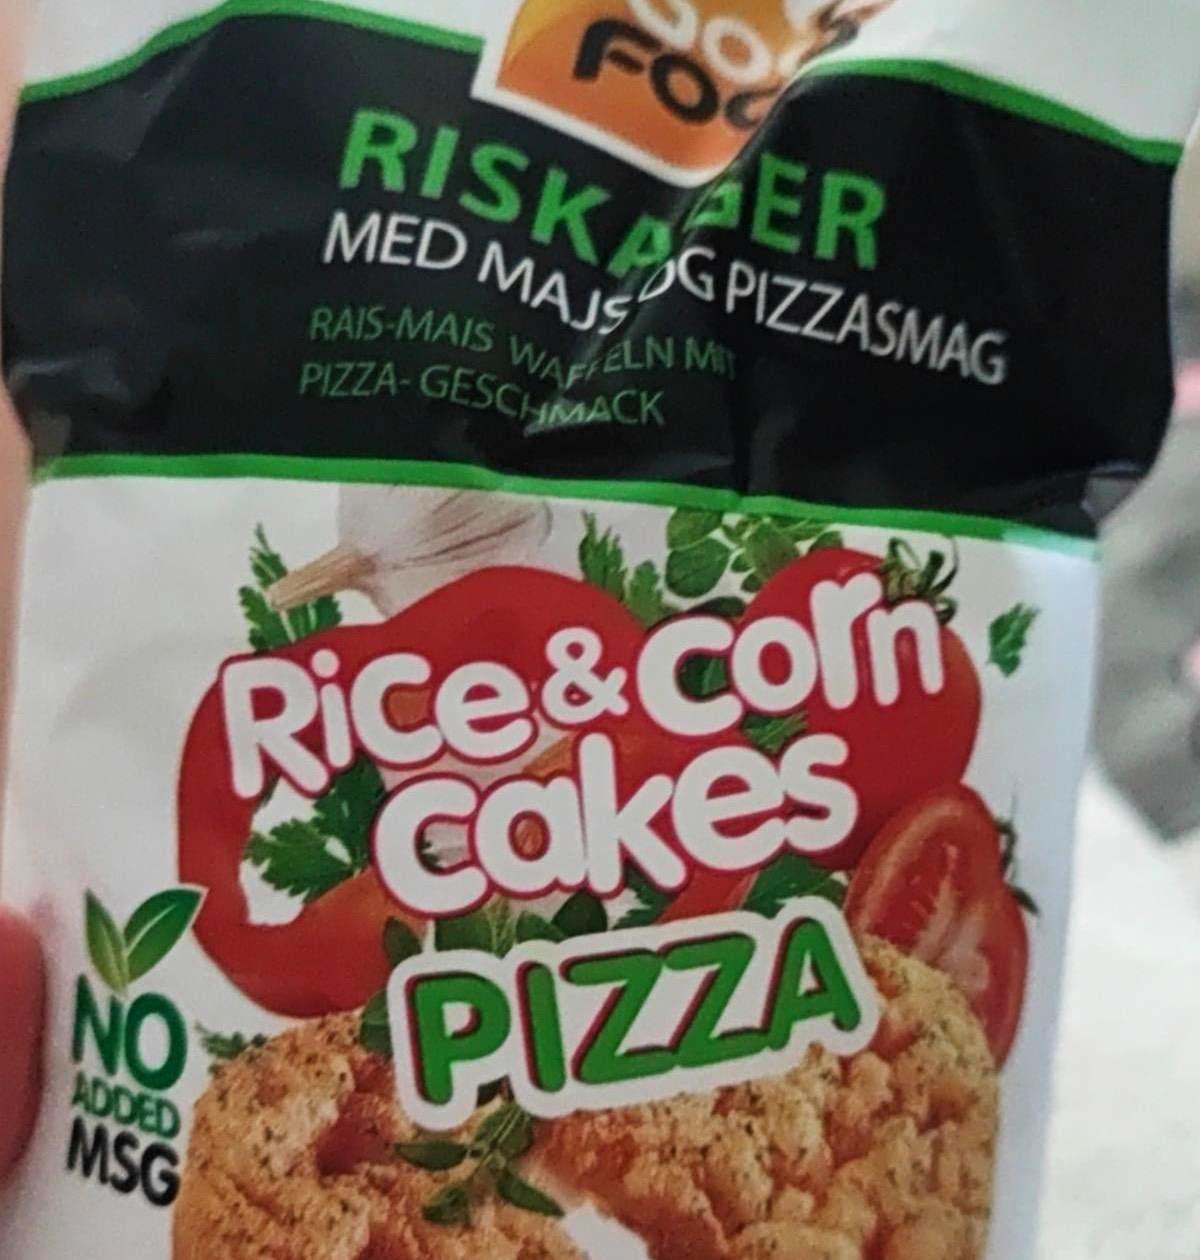 Képek - Rice & corn cakes pizza Good food